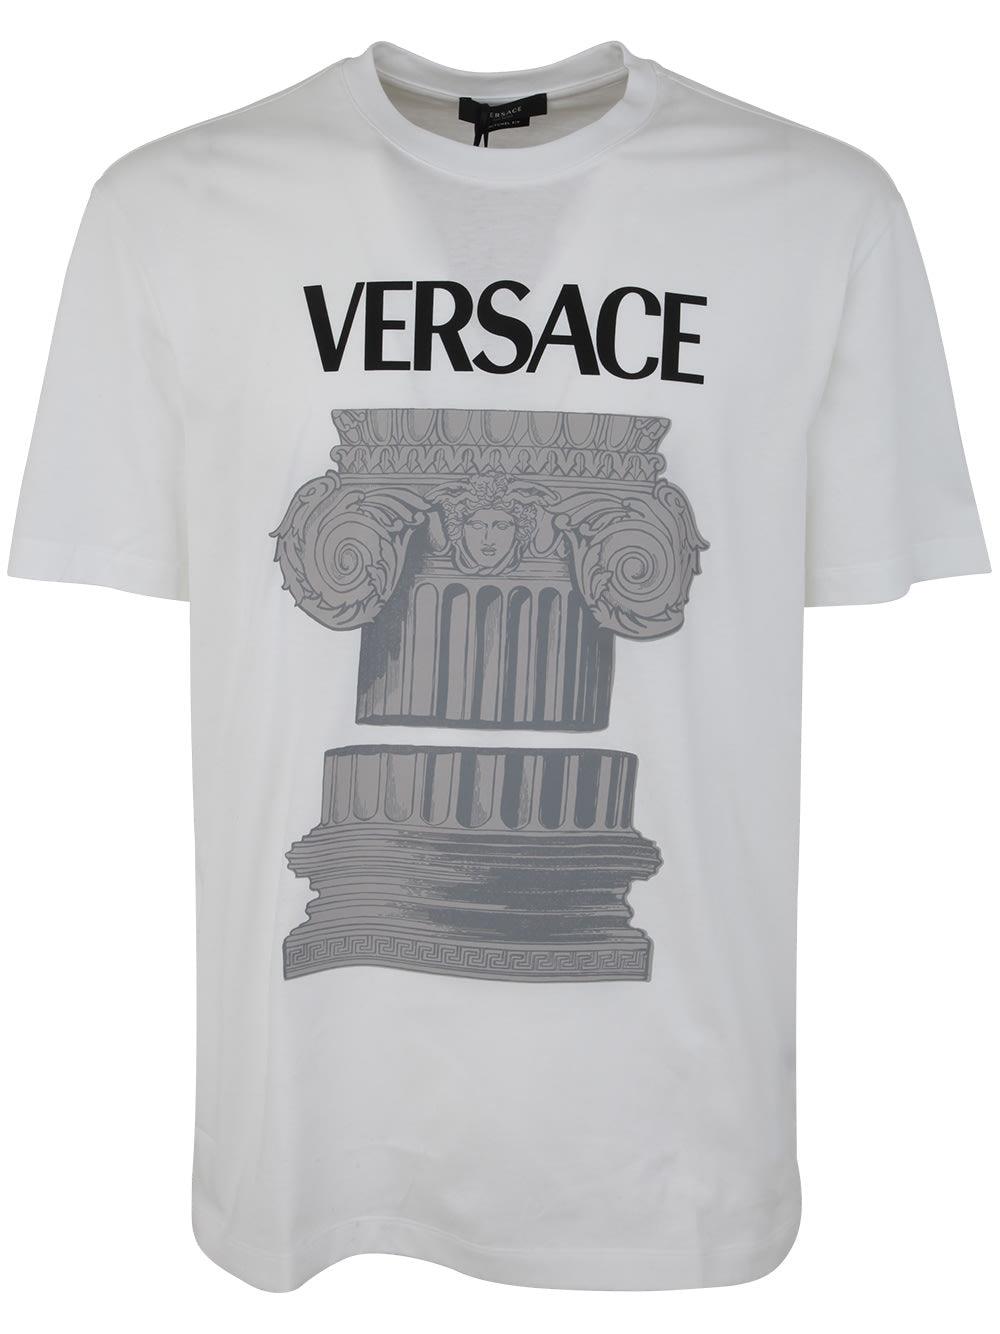 Barocco print cotton jersey t-shirt - Versace - Men